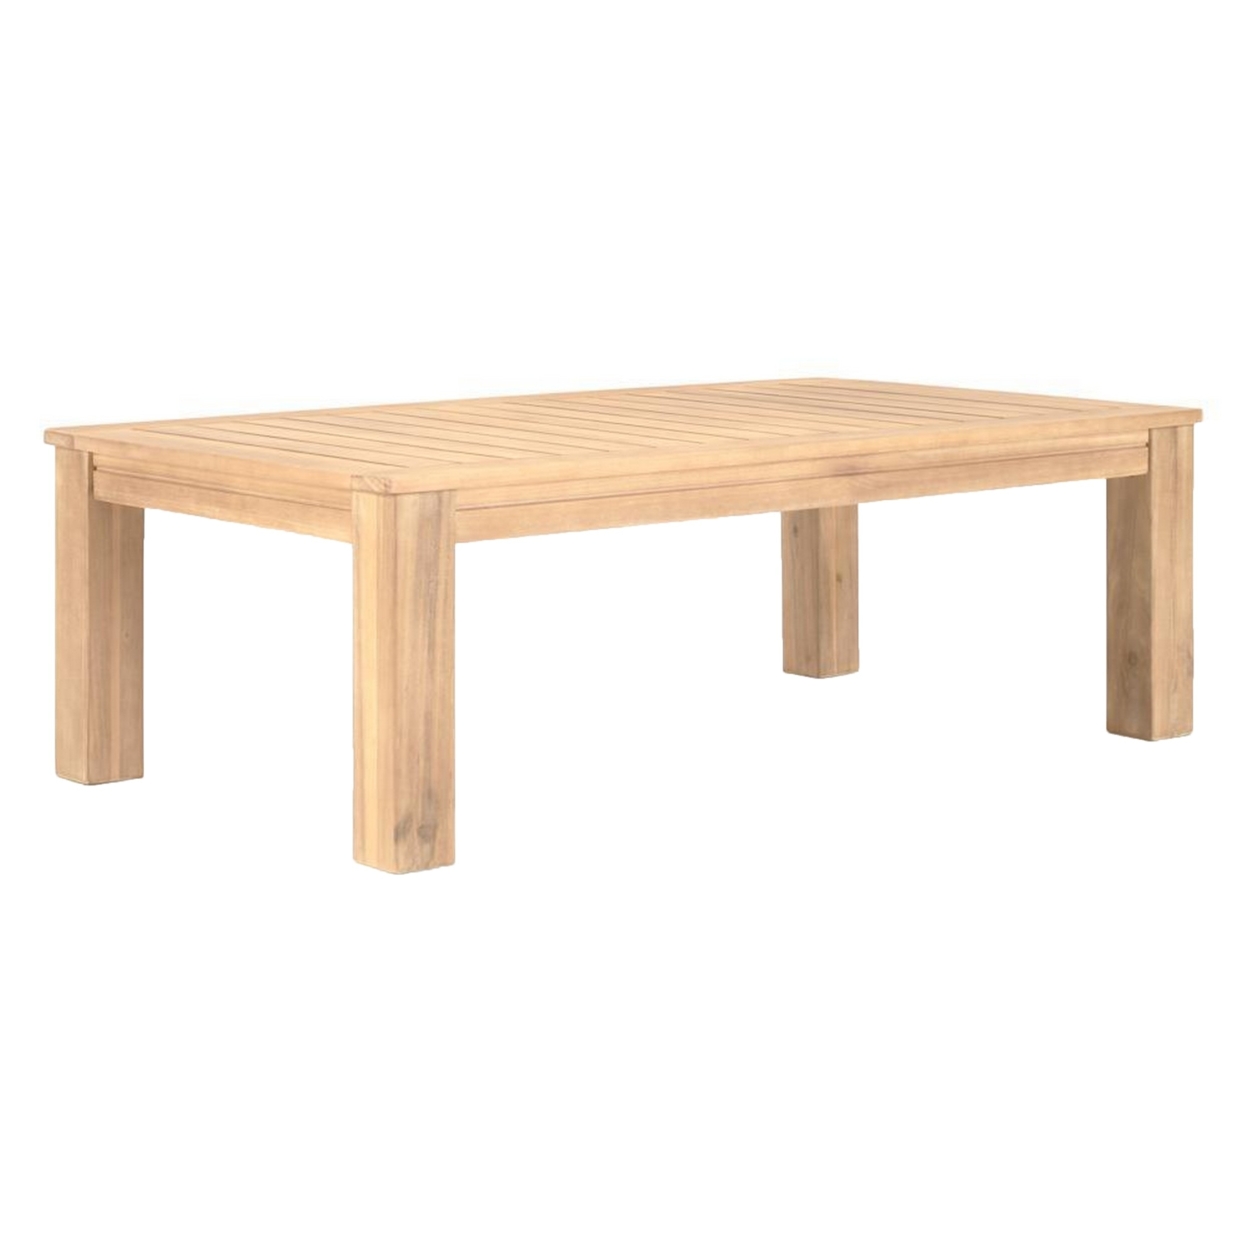 Syka 35 Inch Modern Coffee Table, Acacia Wood, Plank Top, Natural Brown- Saltoro Sherpi